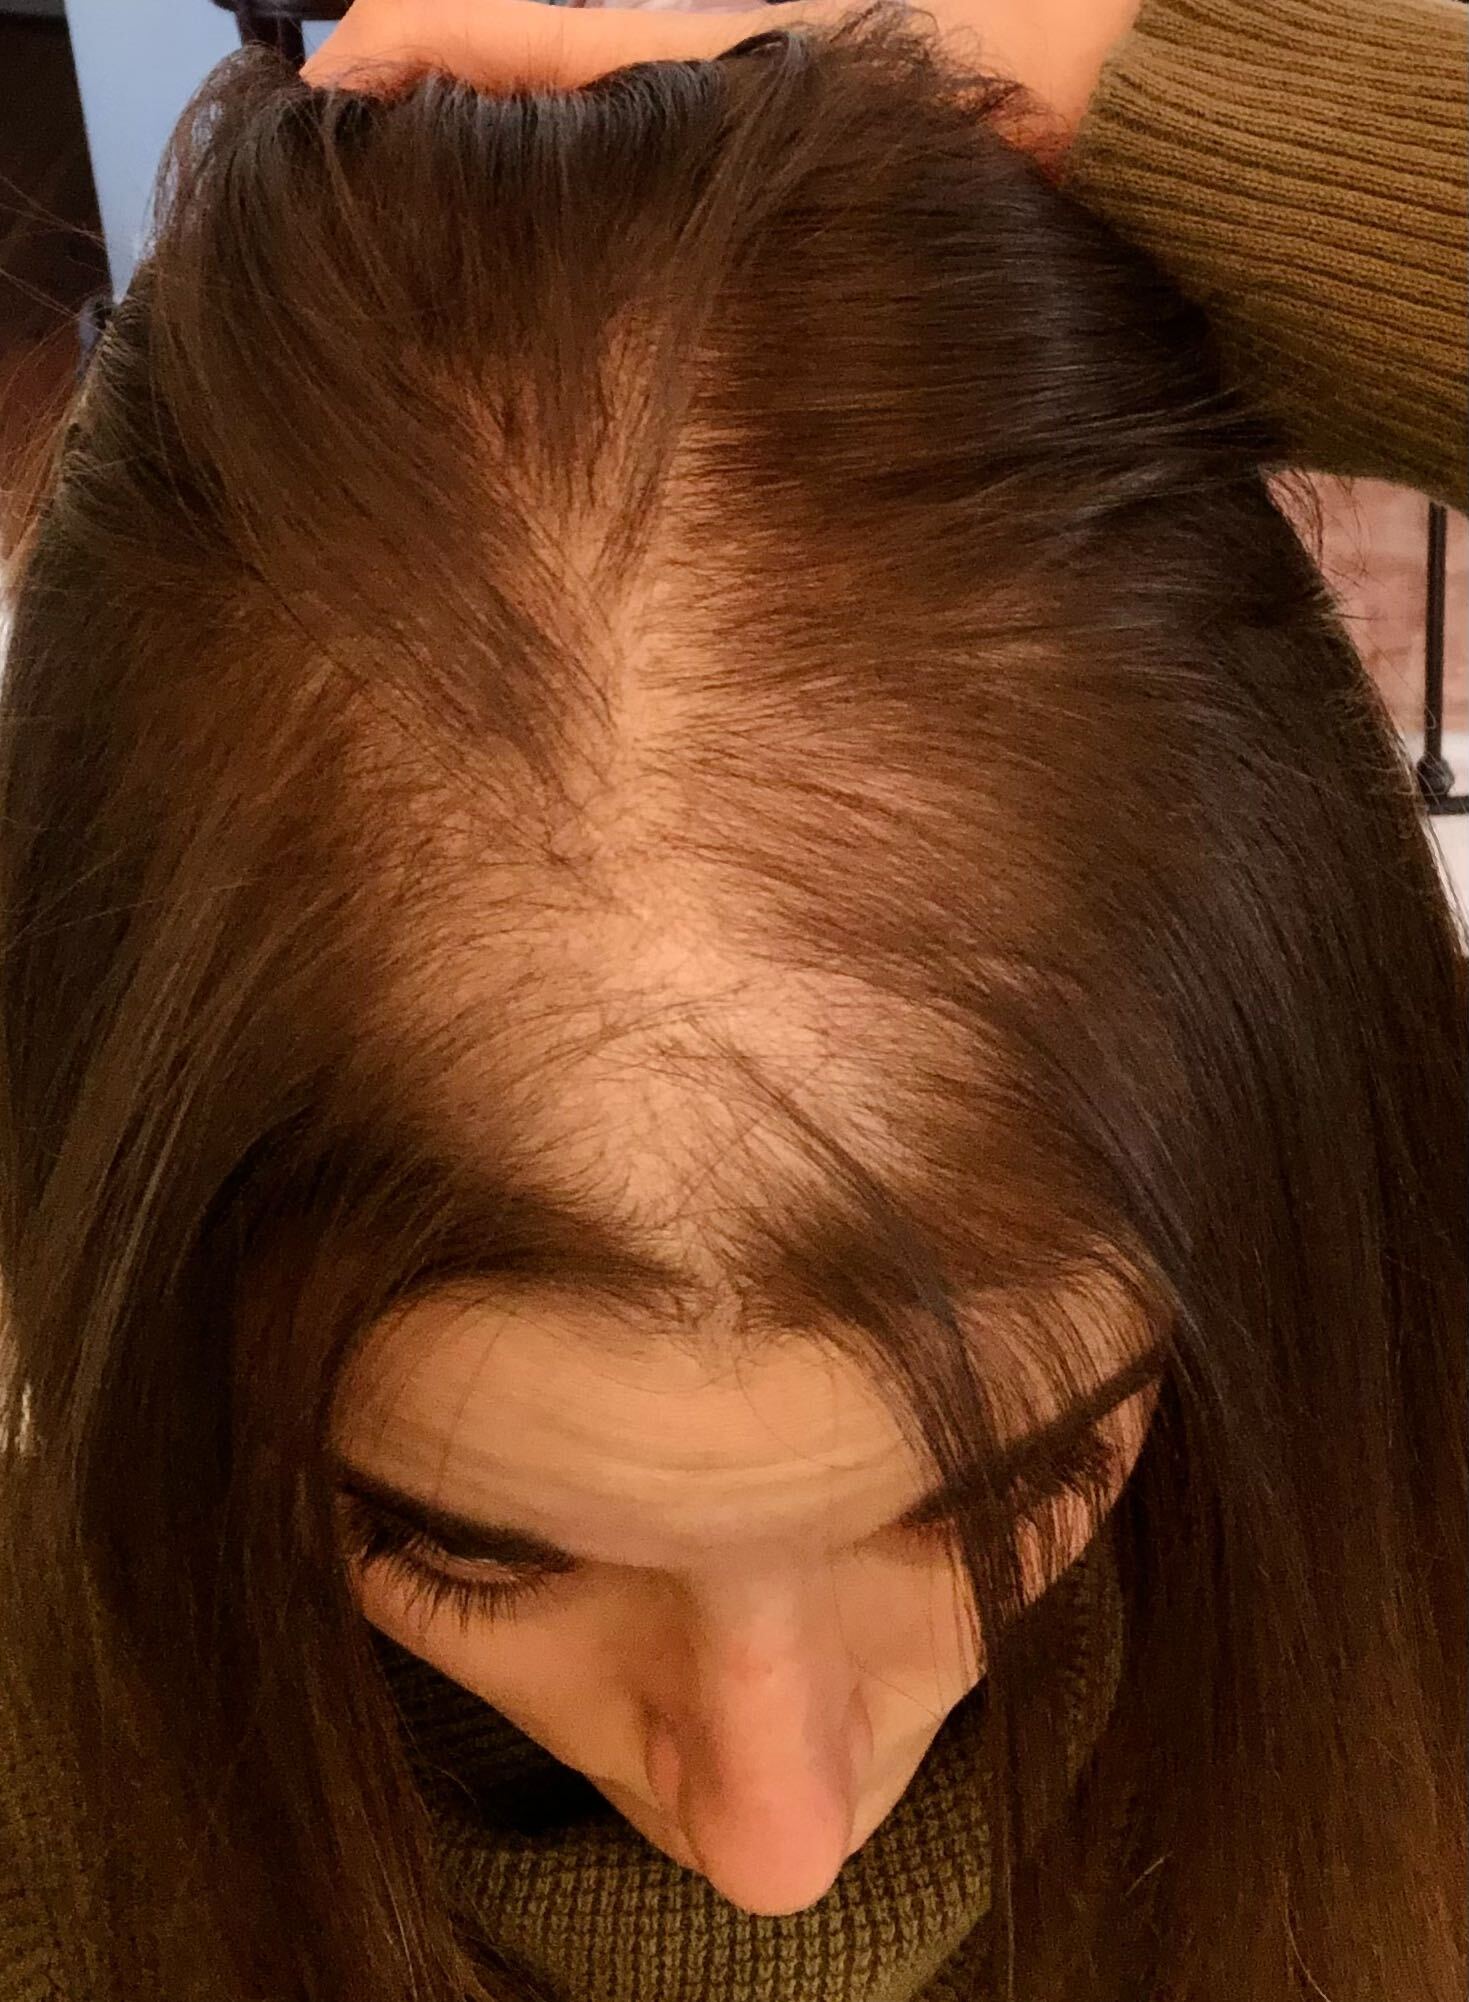 Cristina Marie losing her hair